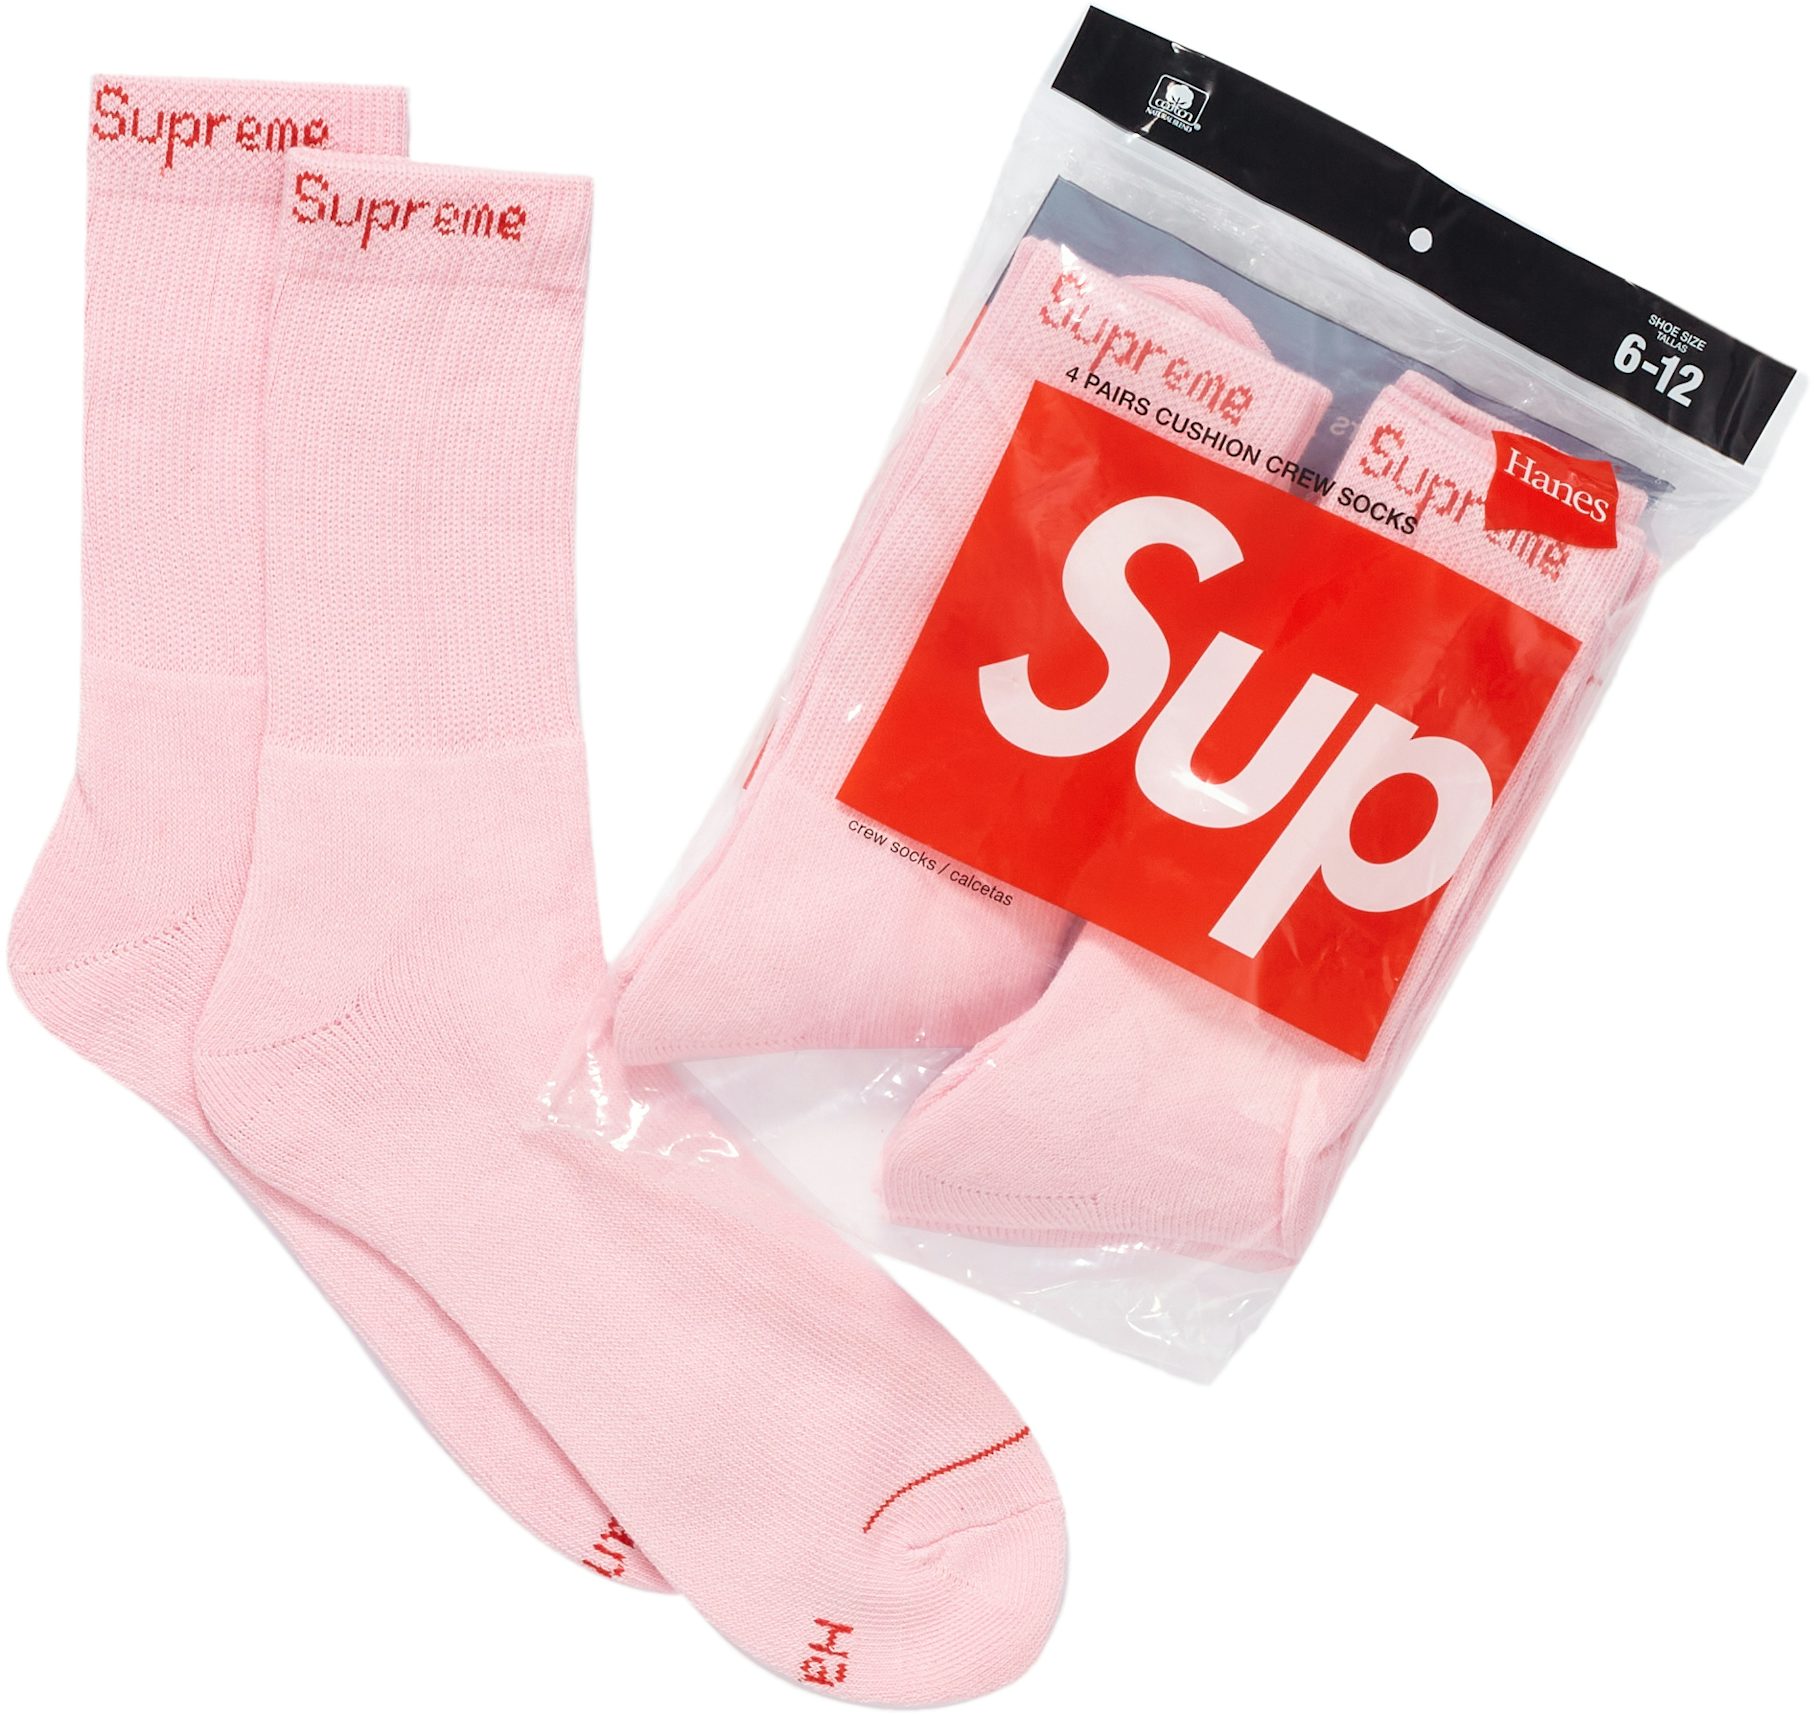 Supreme Jacquard Logos Denim Shirt Pink Size Small